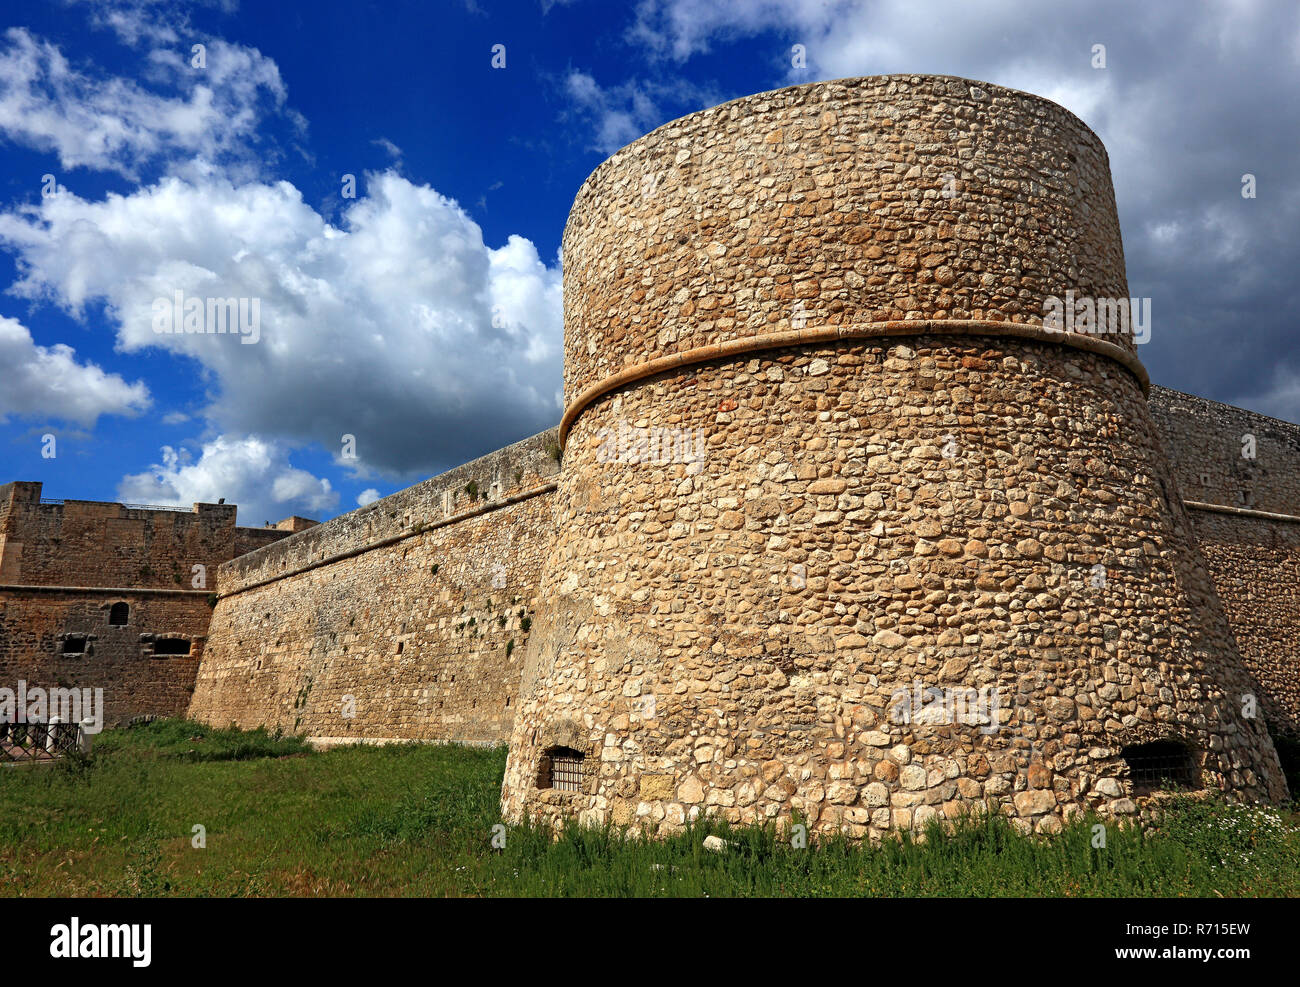 Castle of Manfredonia, National Archaeological Museum, Apulia, Foggia, Italy Stock Photo